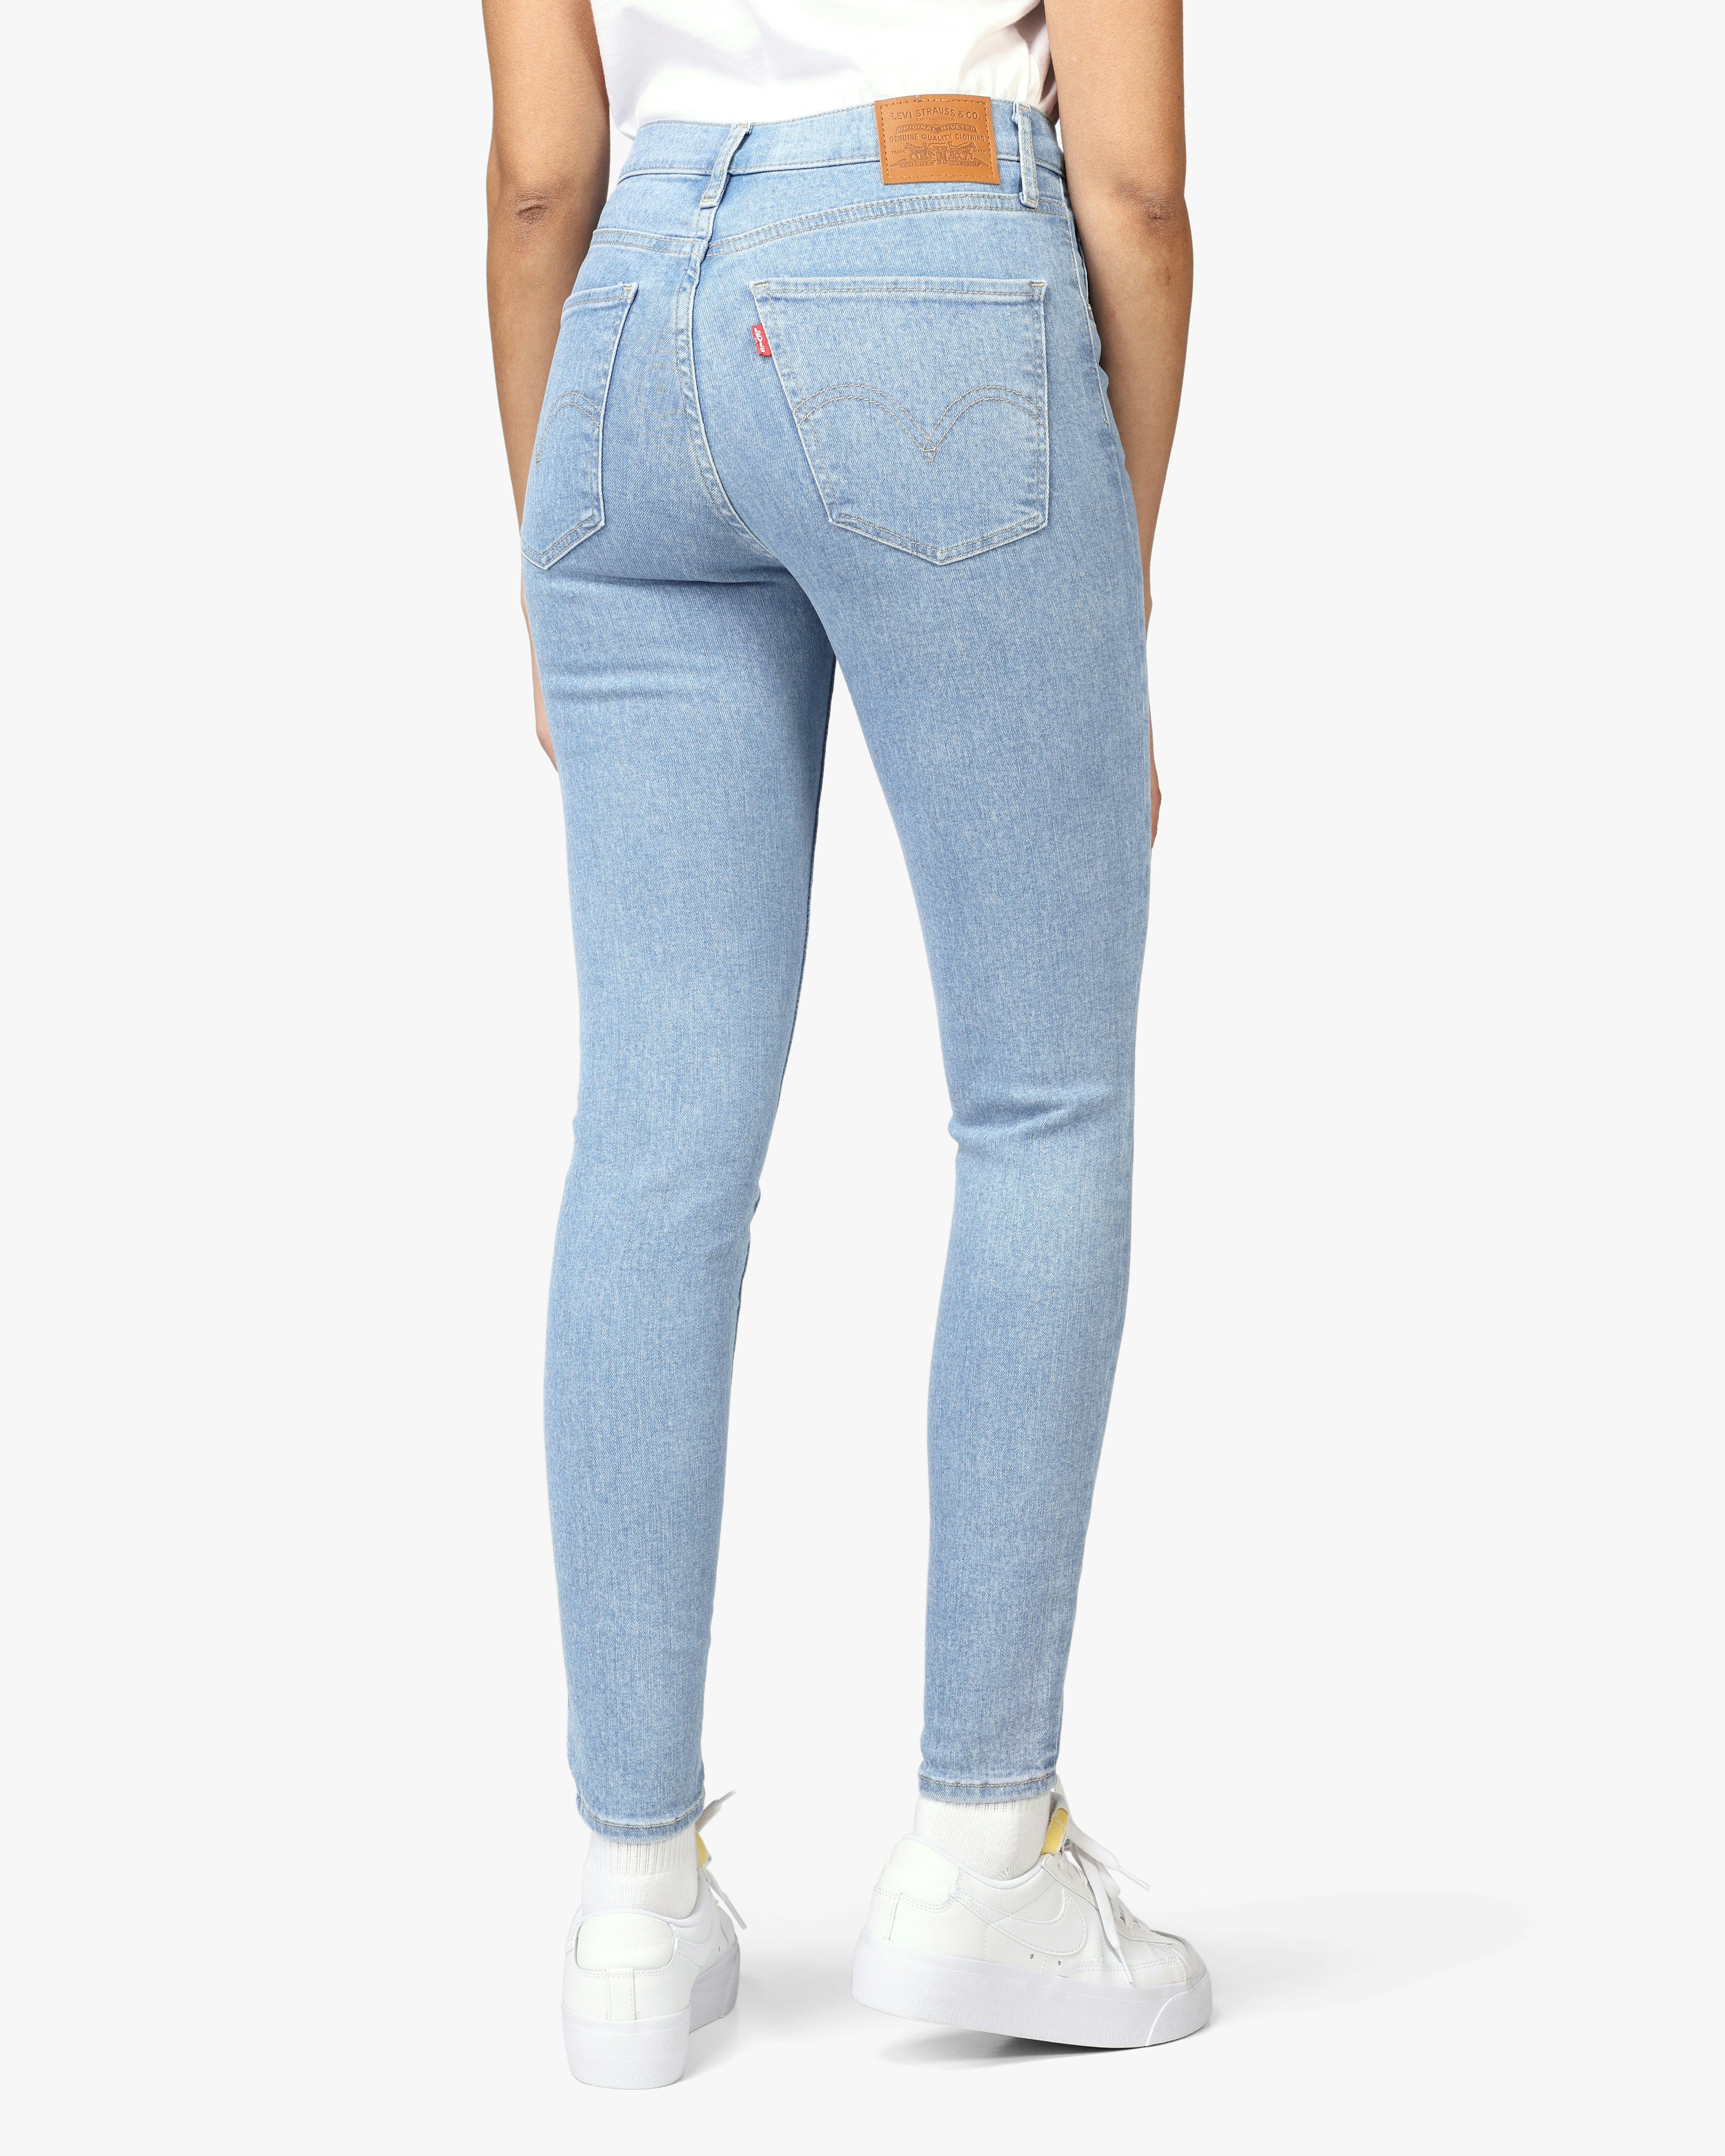 overdrijven bon Aanpassen Levis Mile High Super Skinny Light Blue Jeans | Women | at Carlings.com